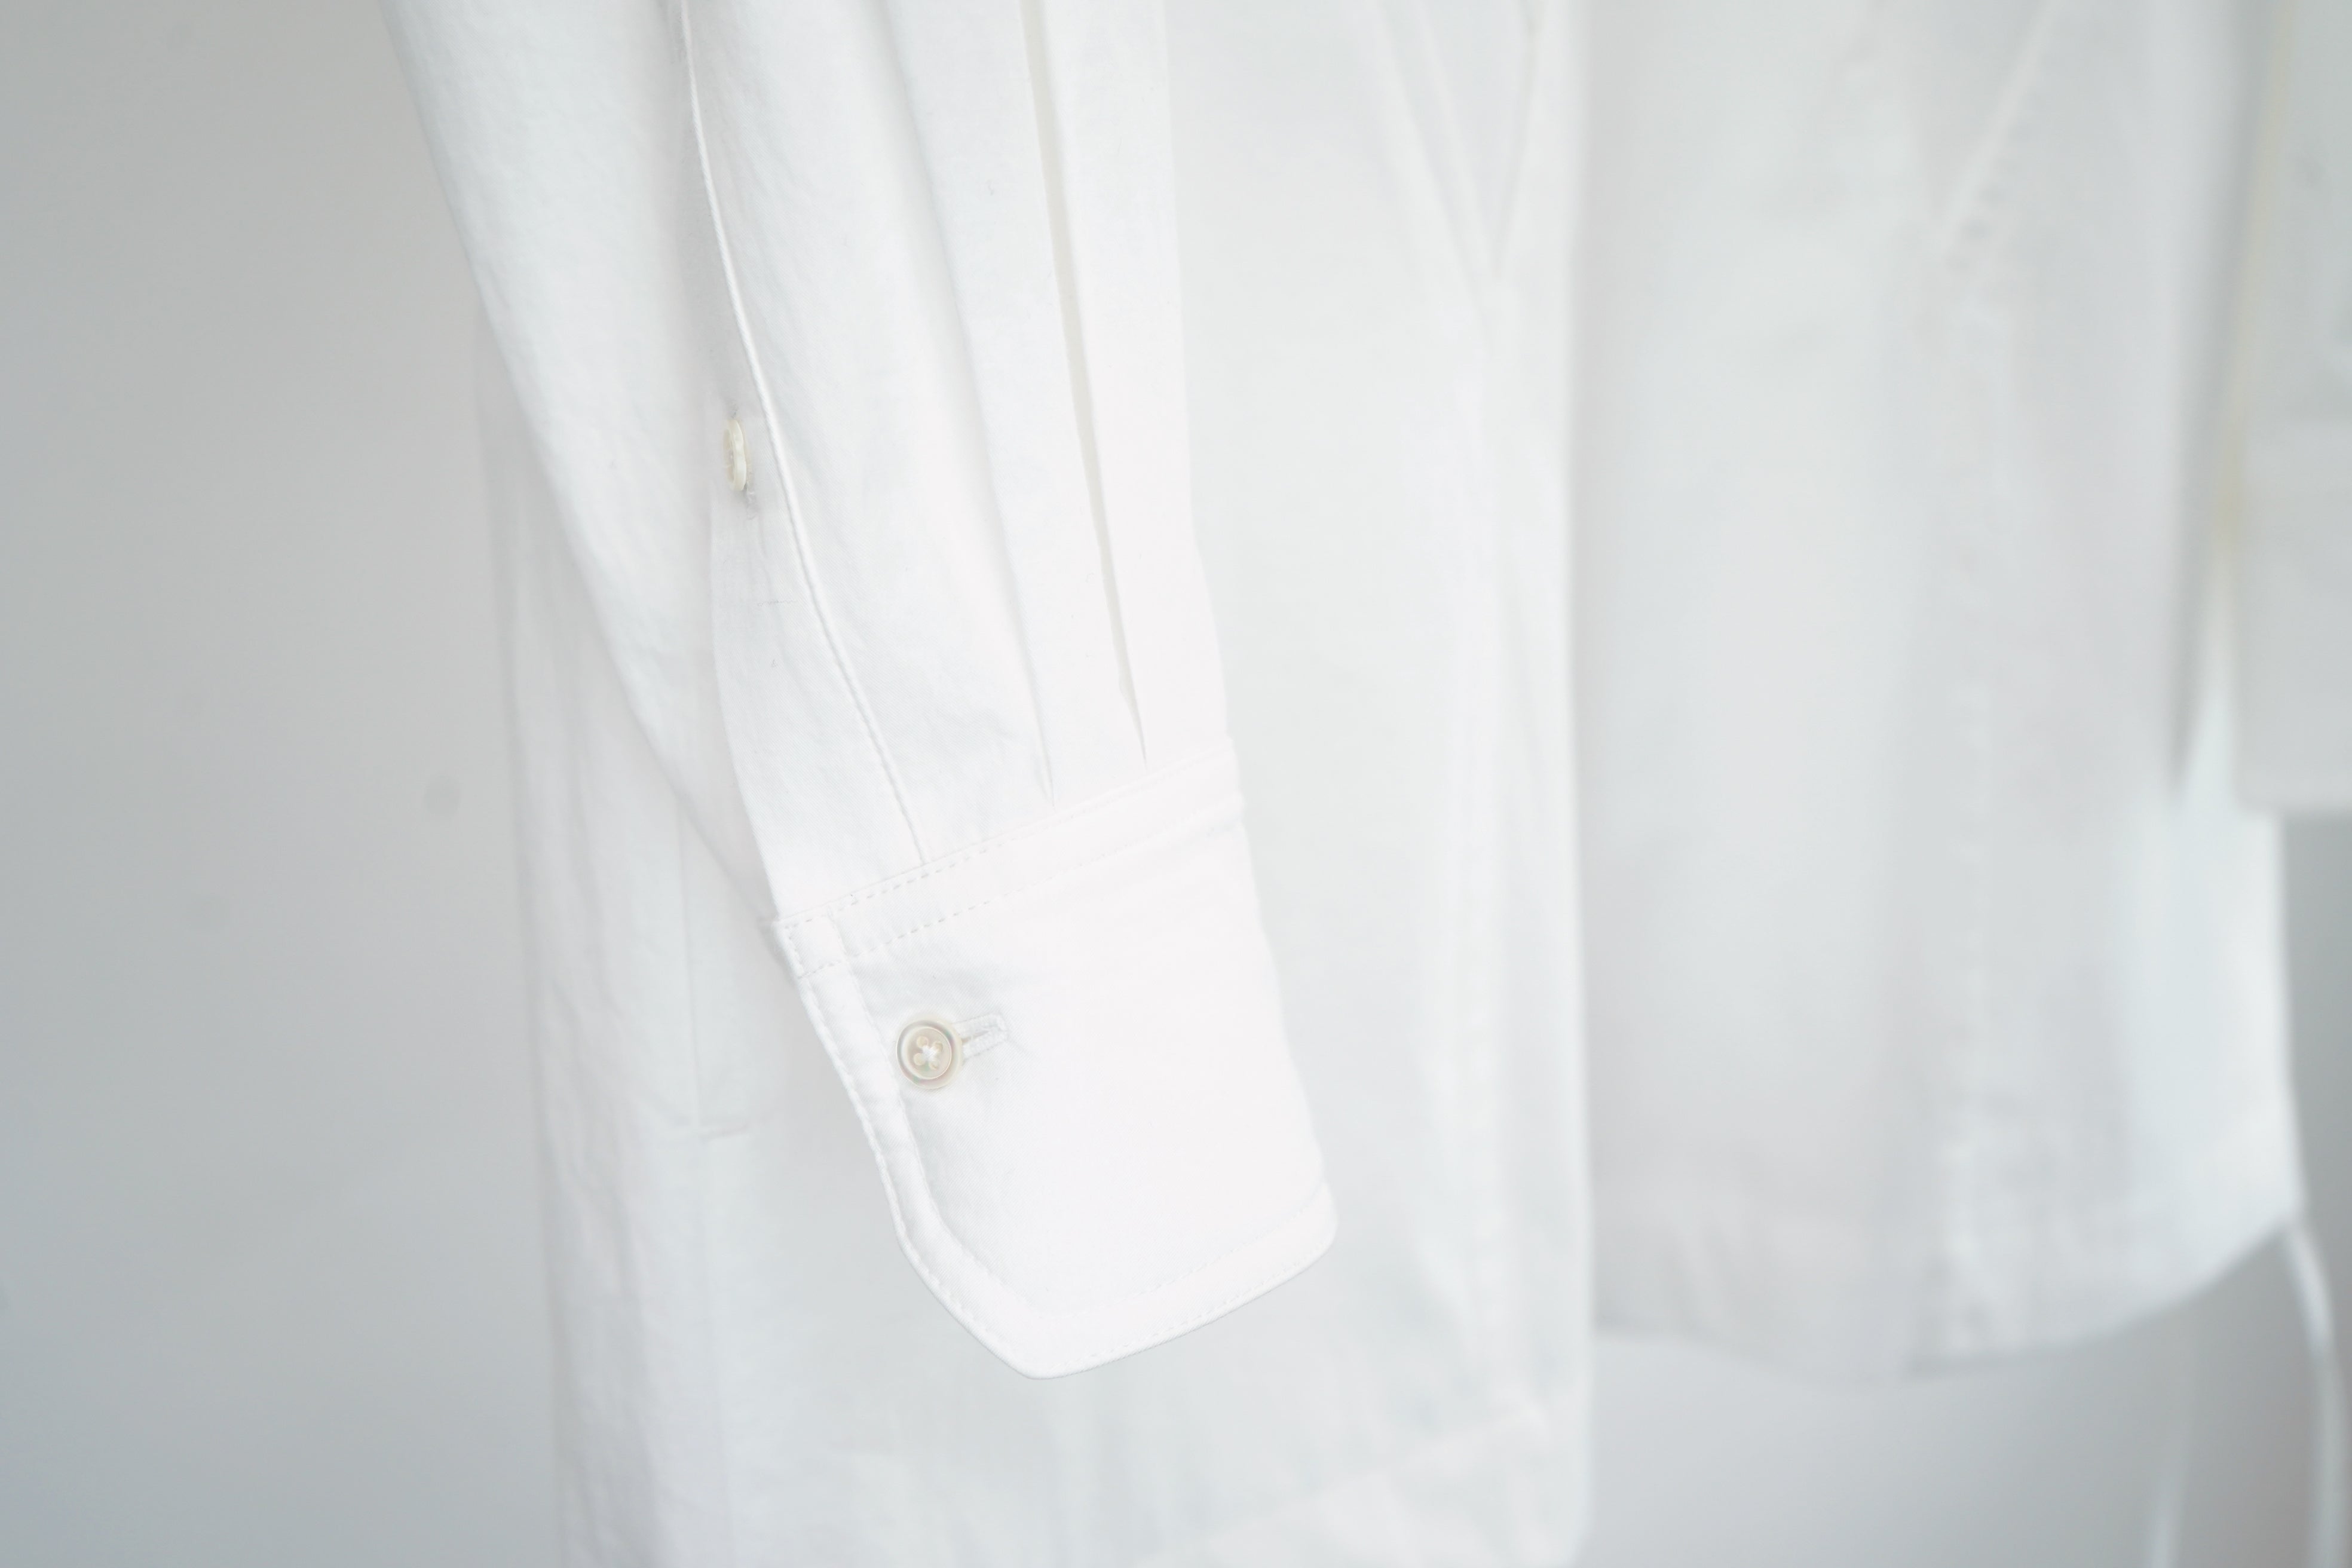 Arc Shirt / white